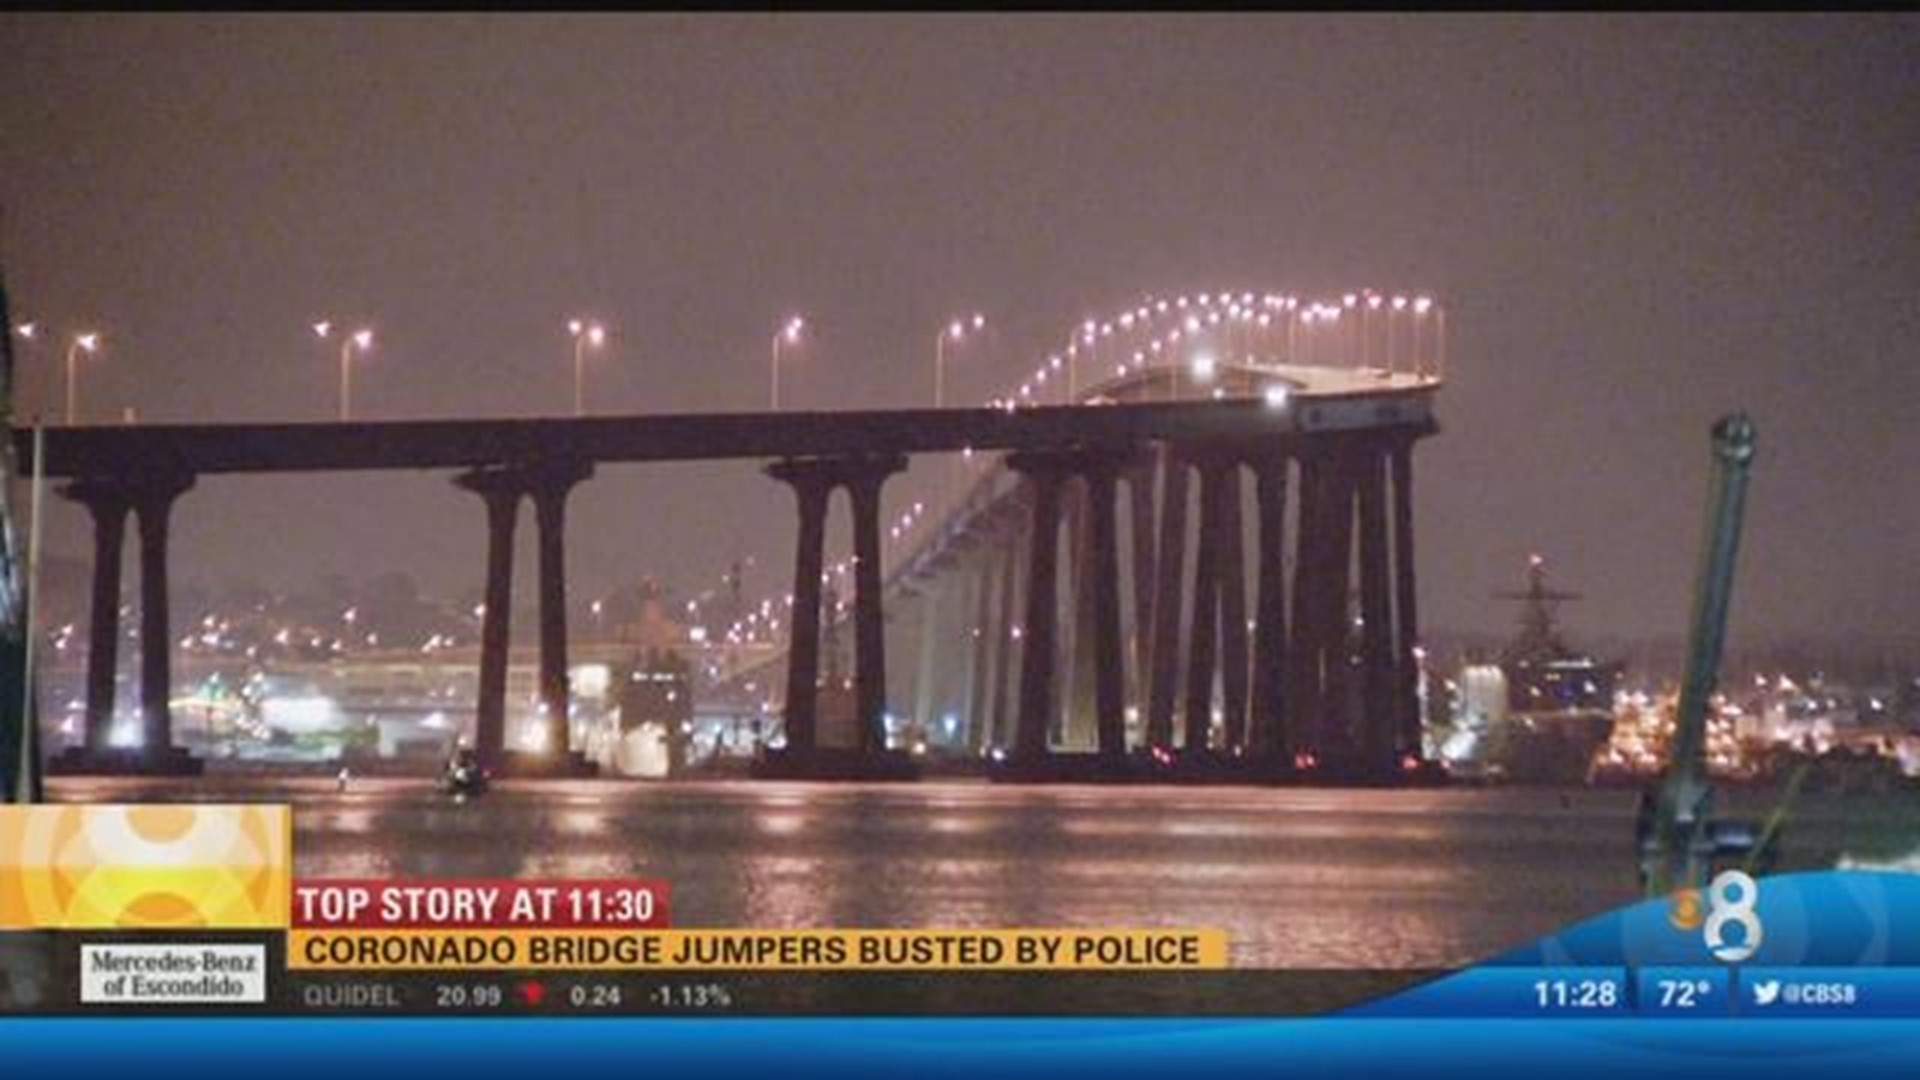 Four activeduty sailors jump off Coronado Bridge